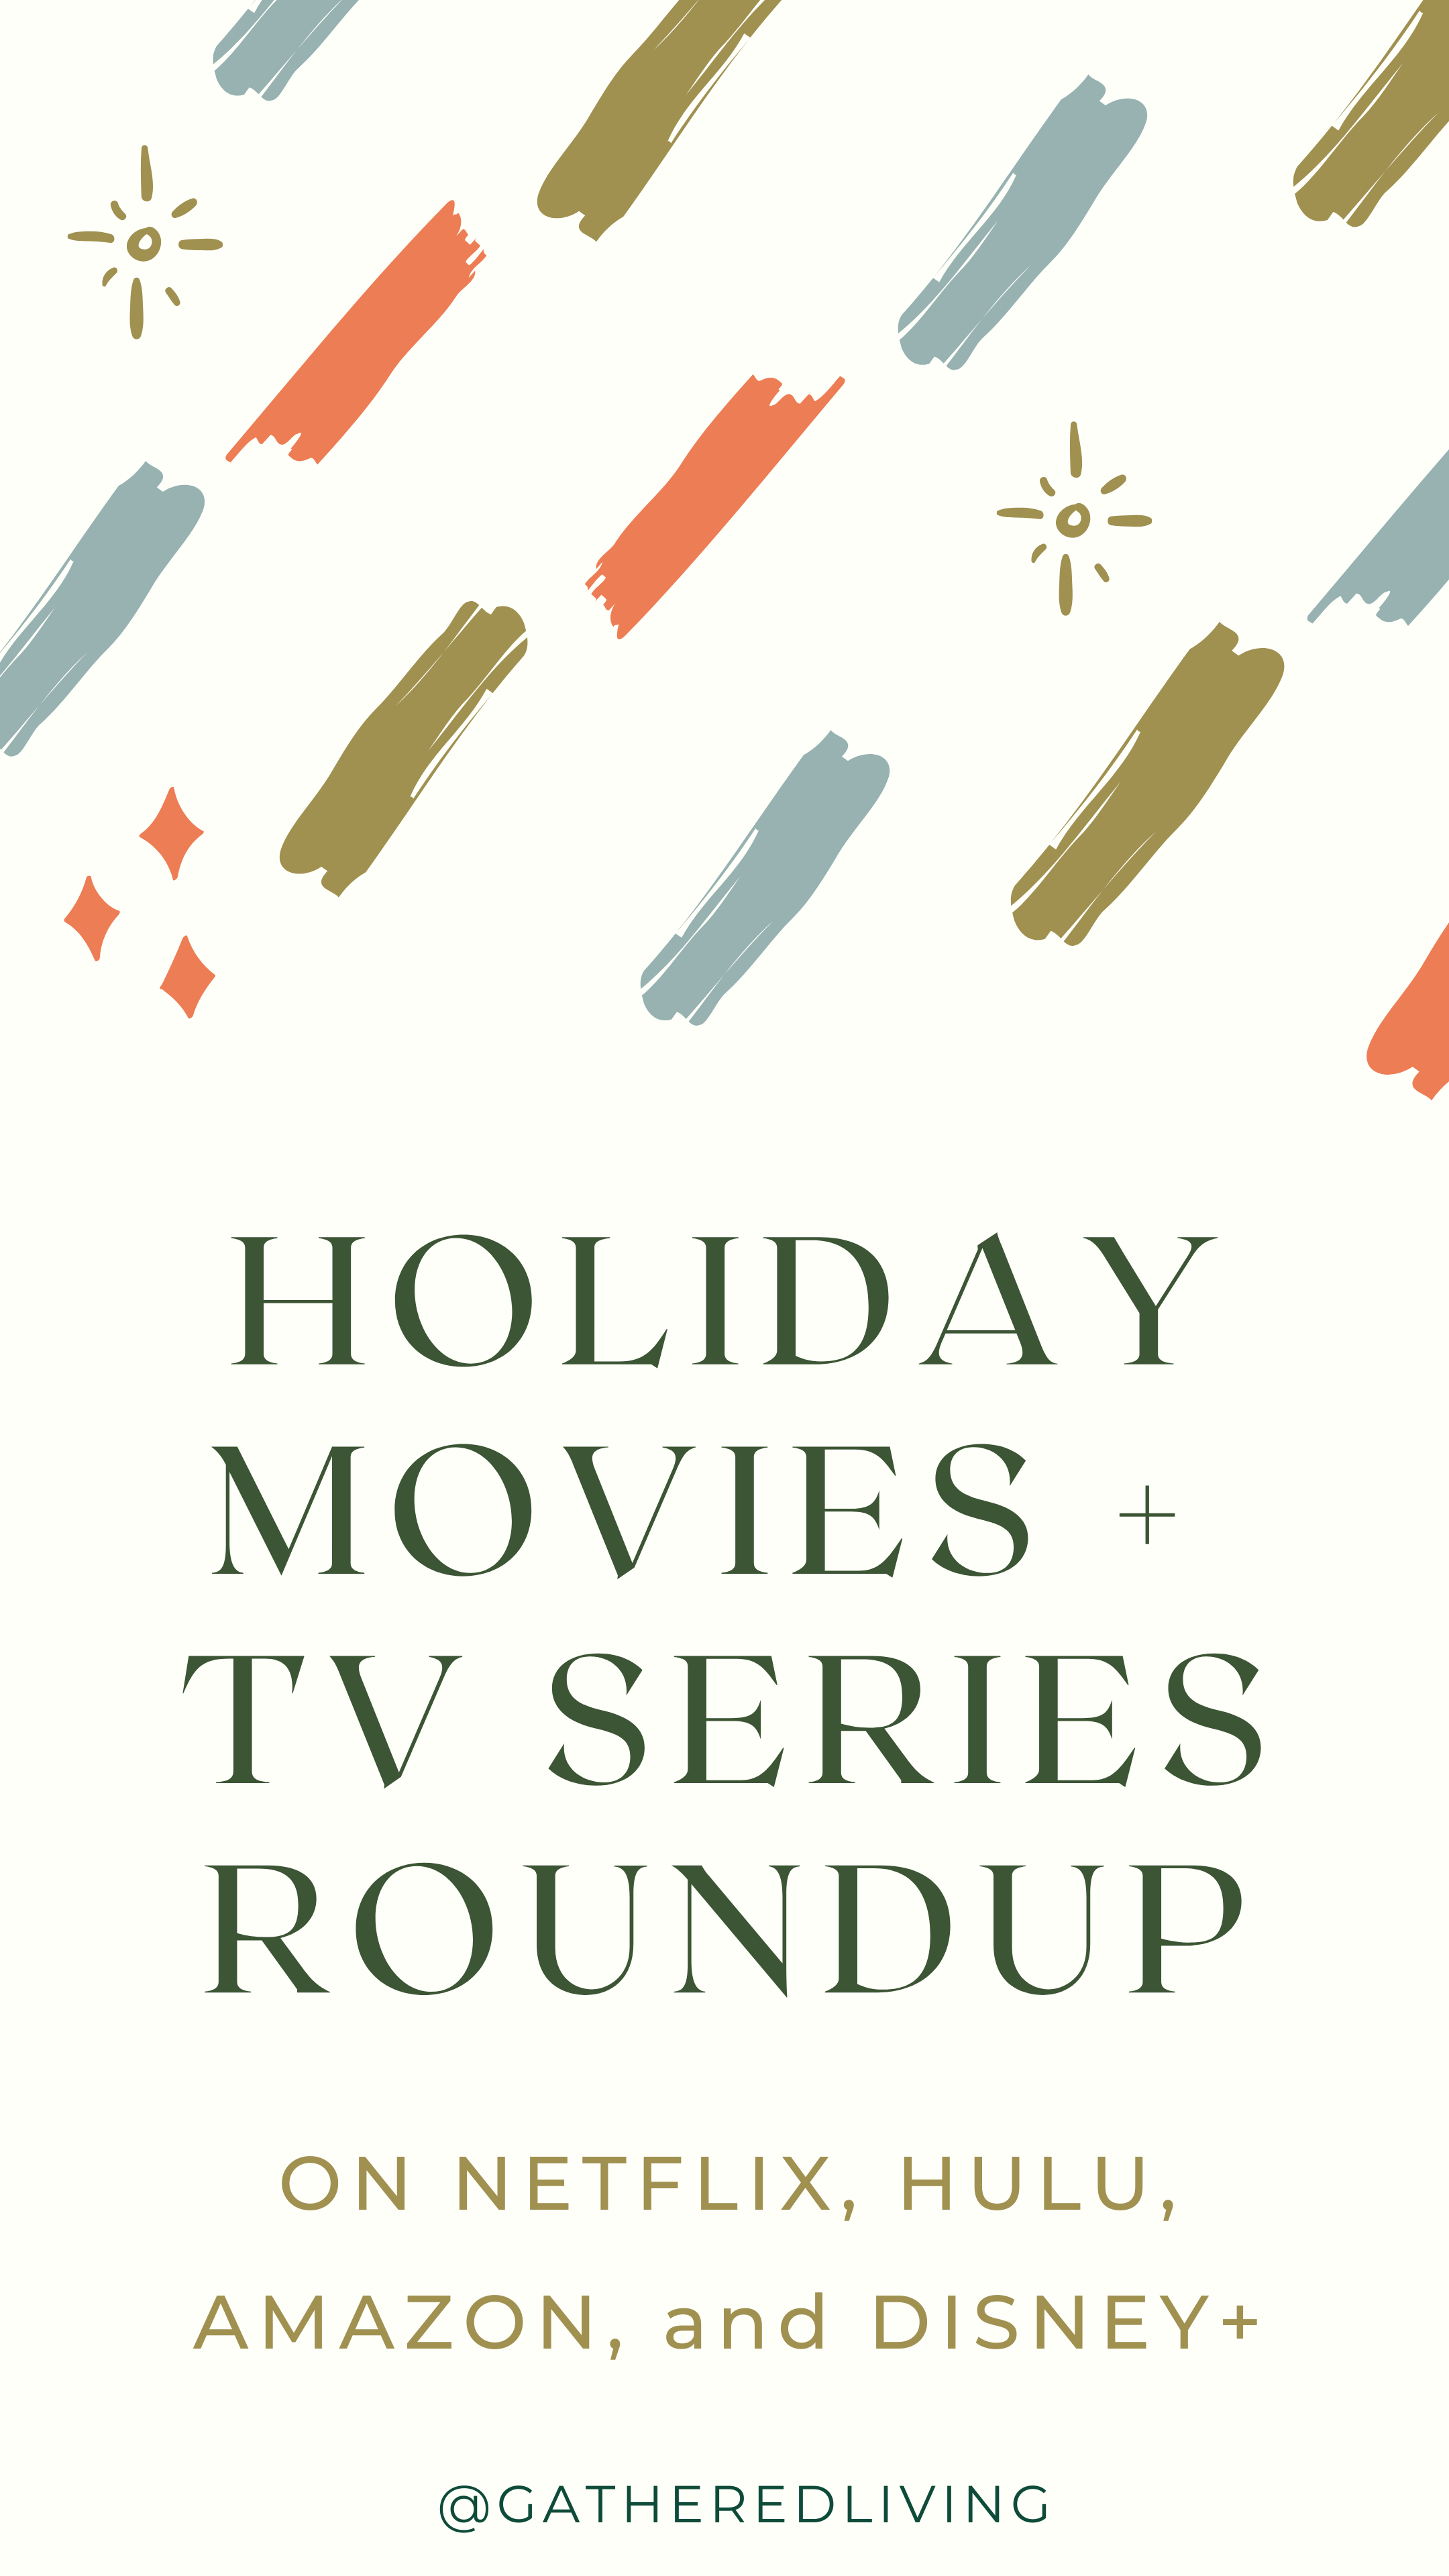 The Best Of Holiday Tv Movies On Netflix Hulu Disney Plus Amazon Prime Gathered Living